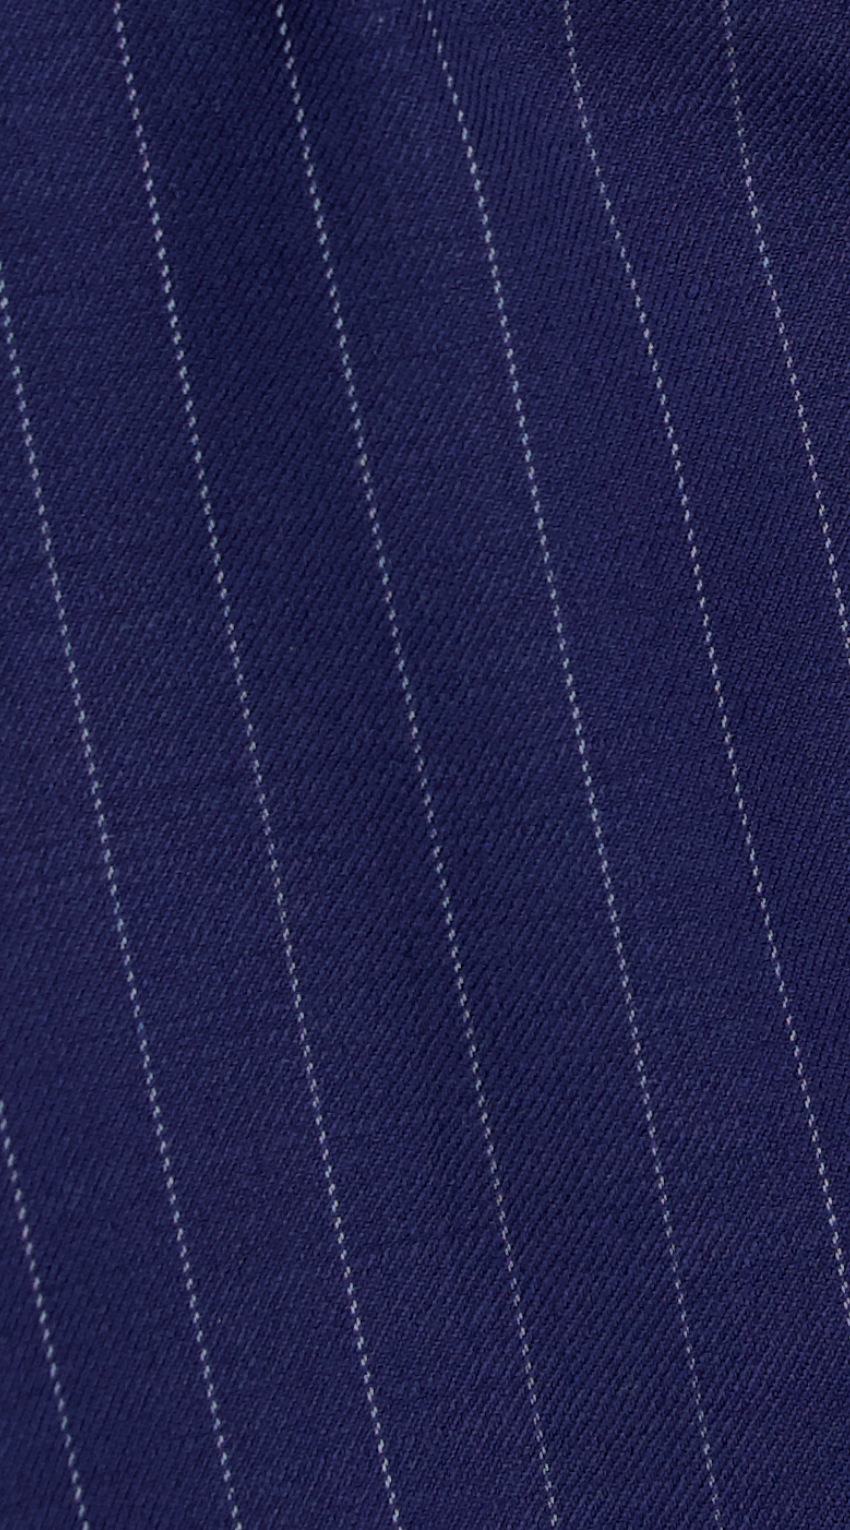 Royal Blue Pinstripe Wool Suit